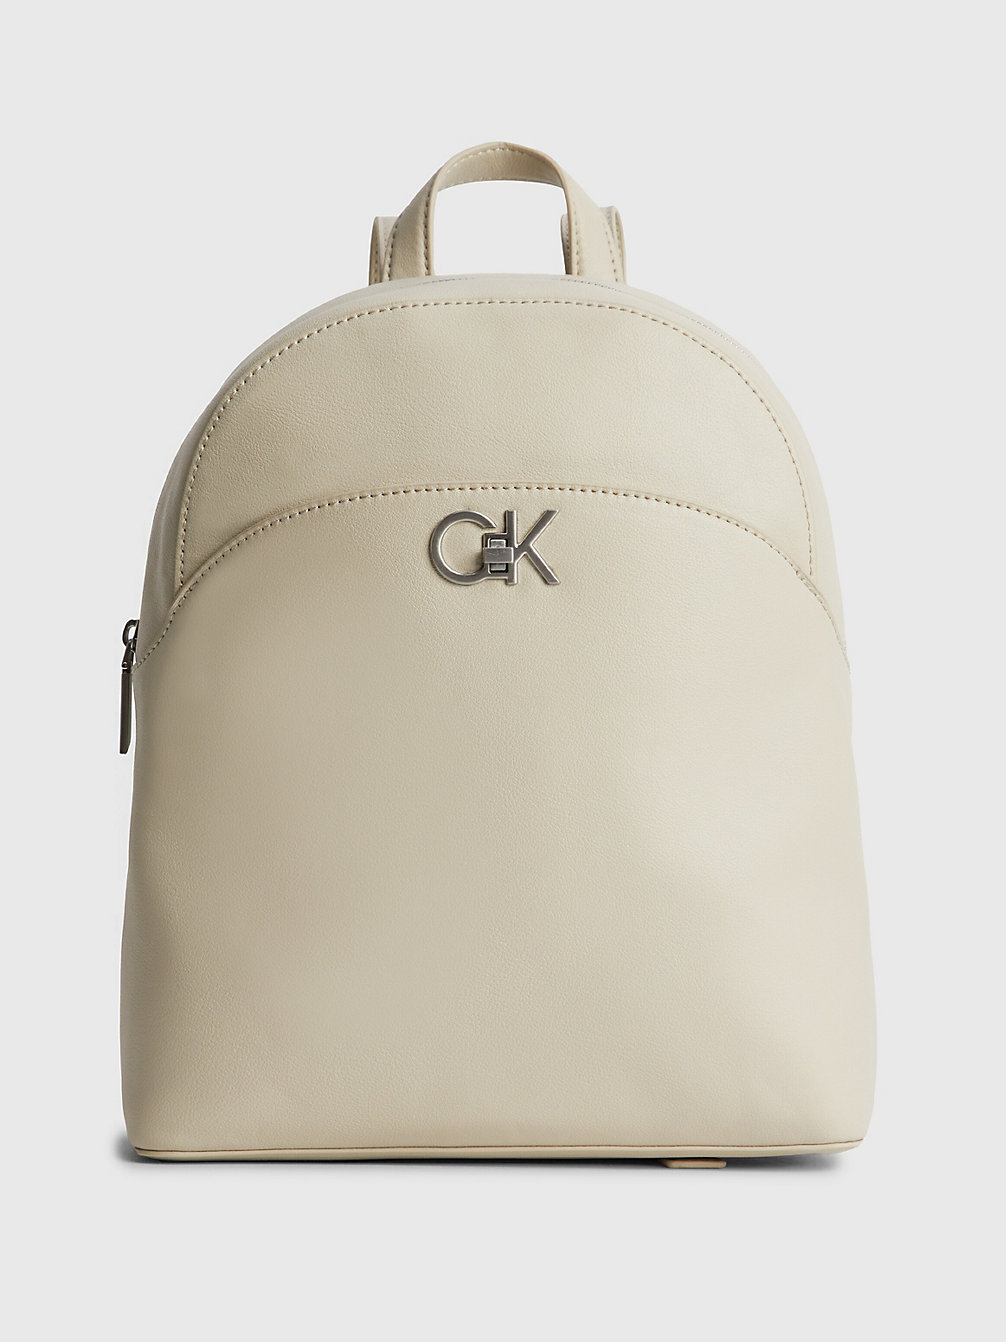 STONEY BEIGE Recycled Round Backpack undefined women Calvin Klein